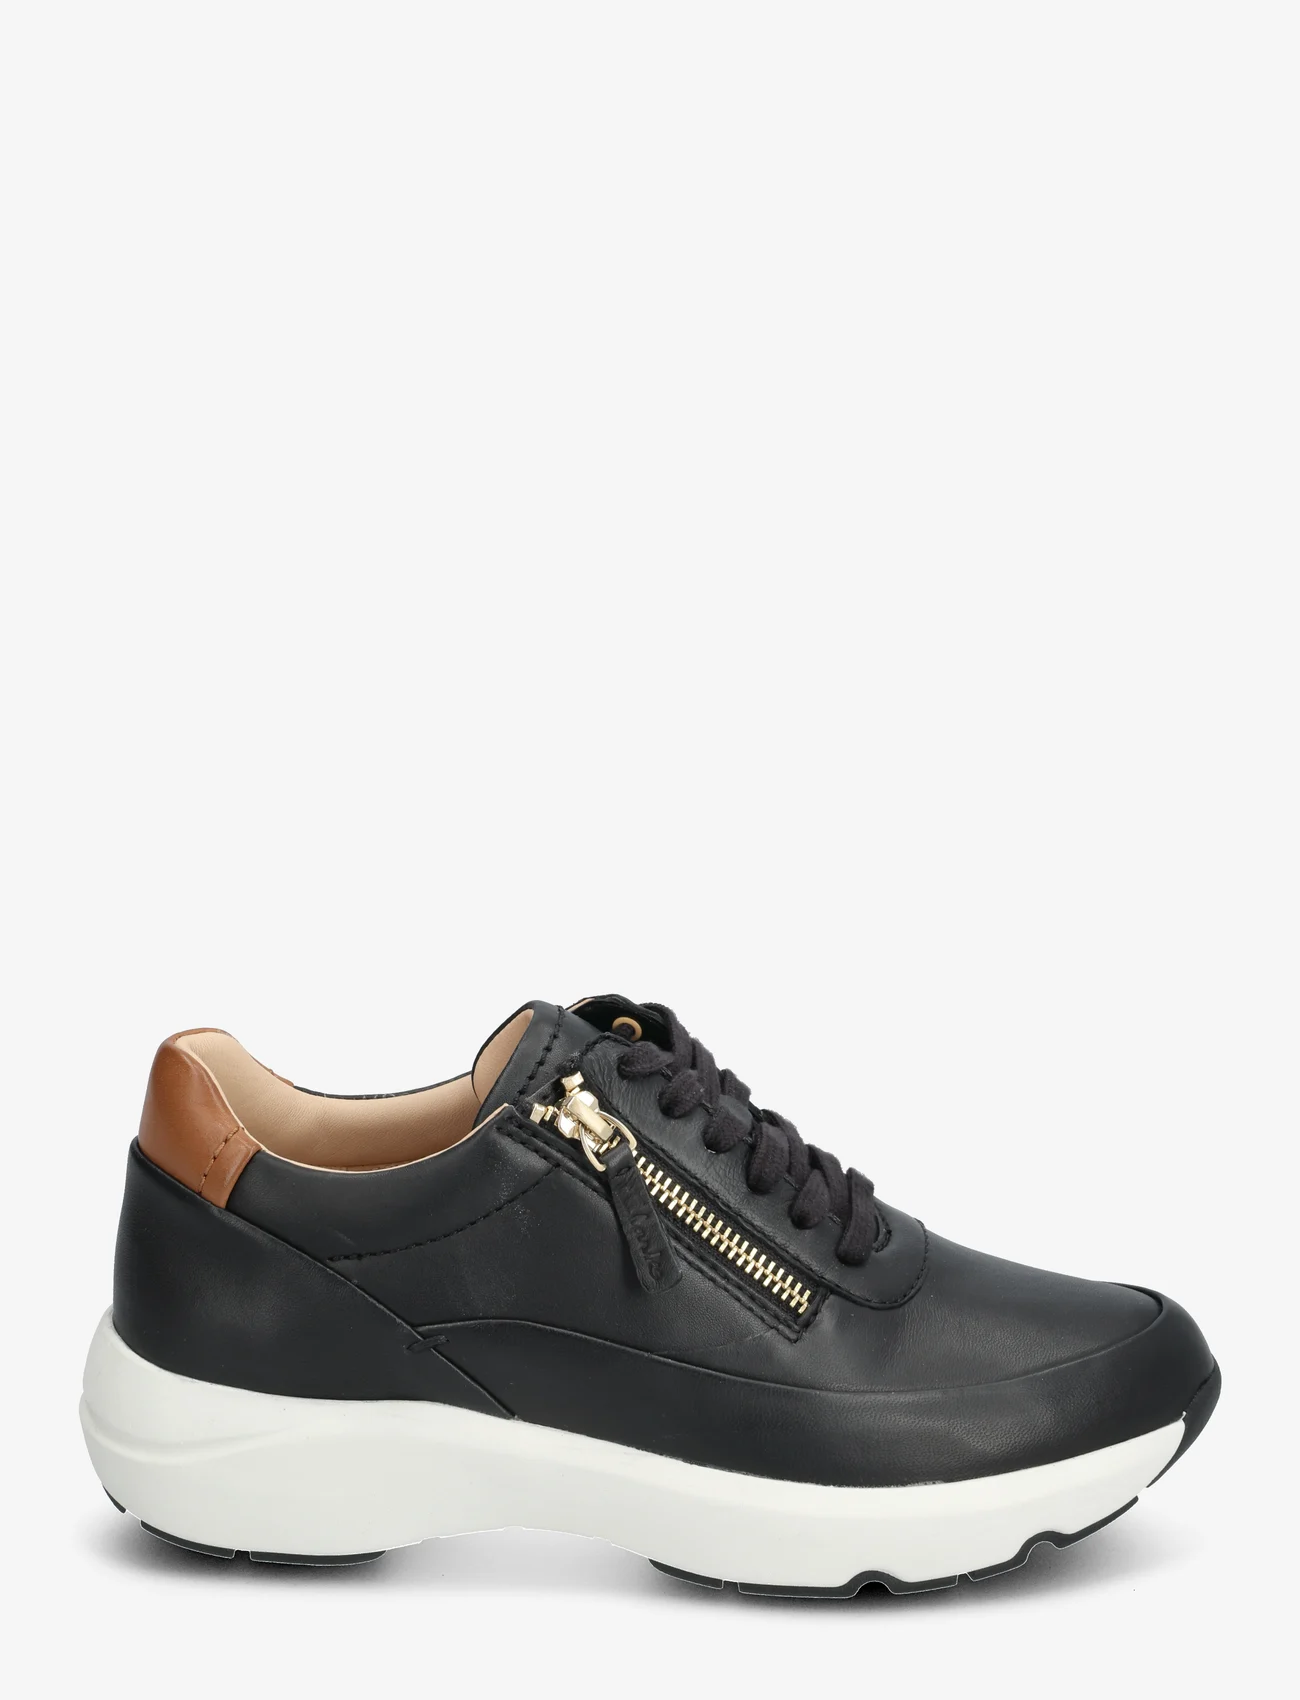 Clarks - Tivoli Zip D - sneakers med lavt skaft - 1216 black leather - 1